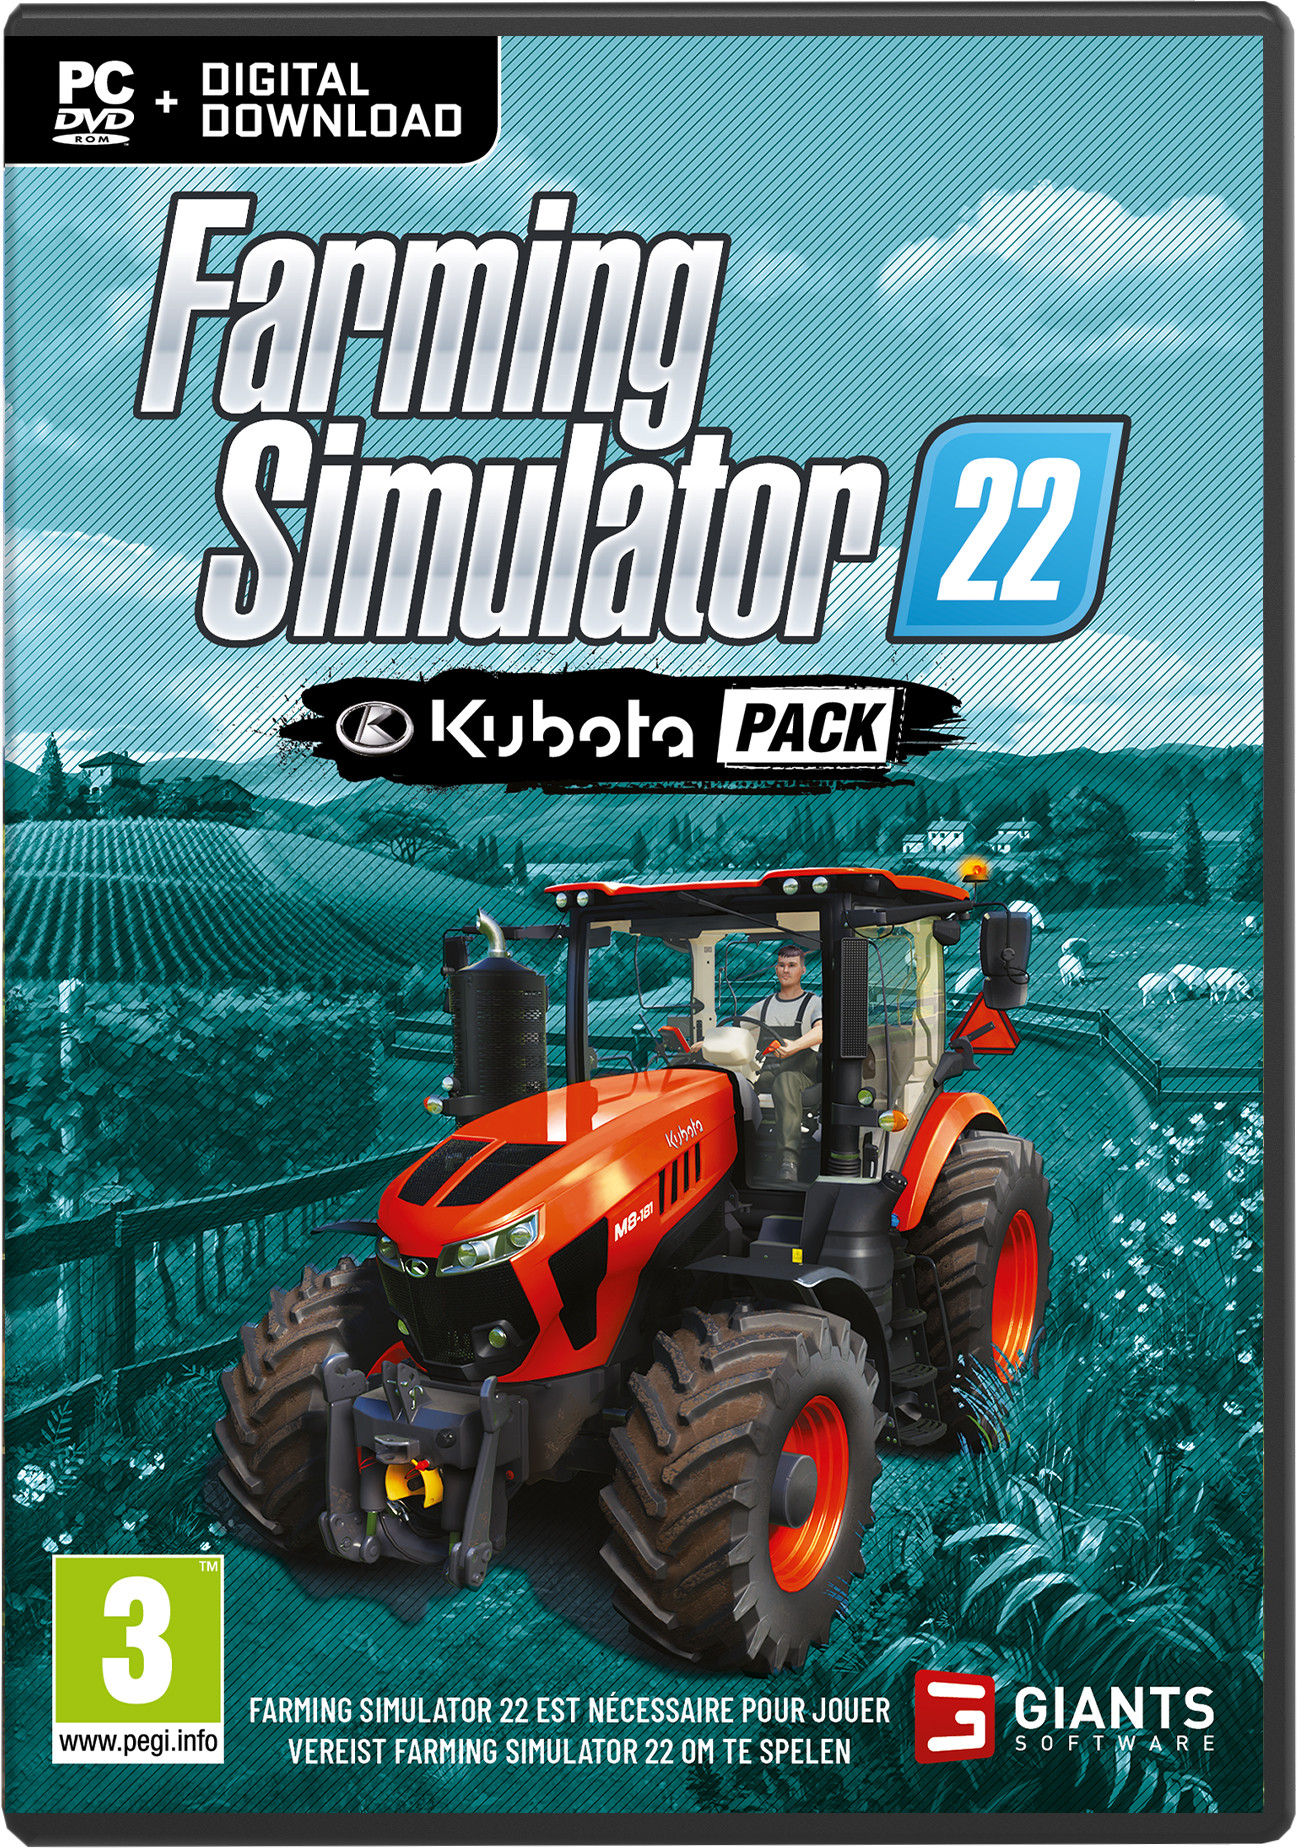 GIANTS Software GmbH Farming Simulator 22 Kubota Expansion Pack